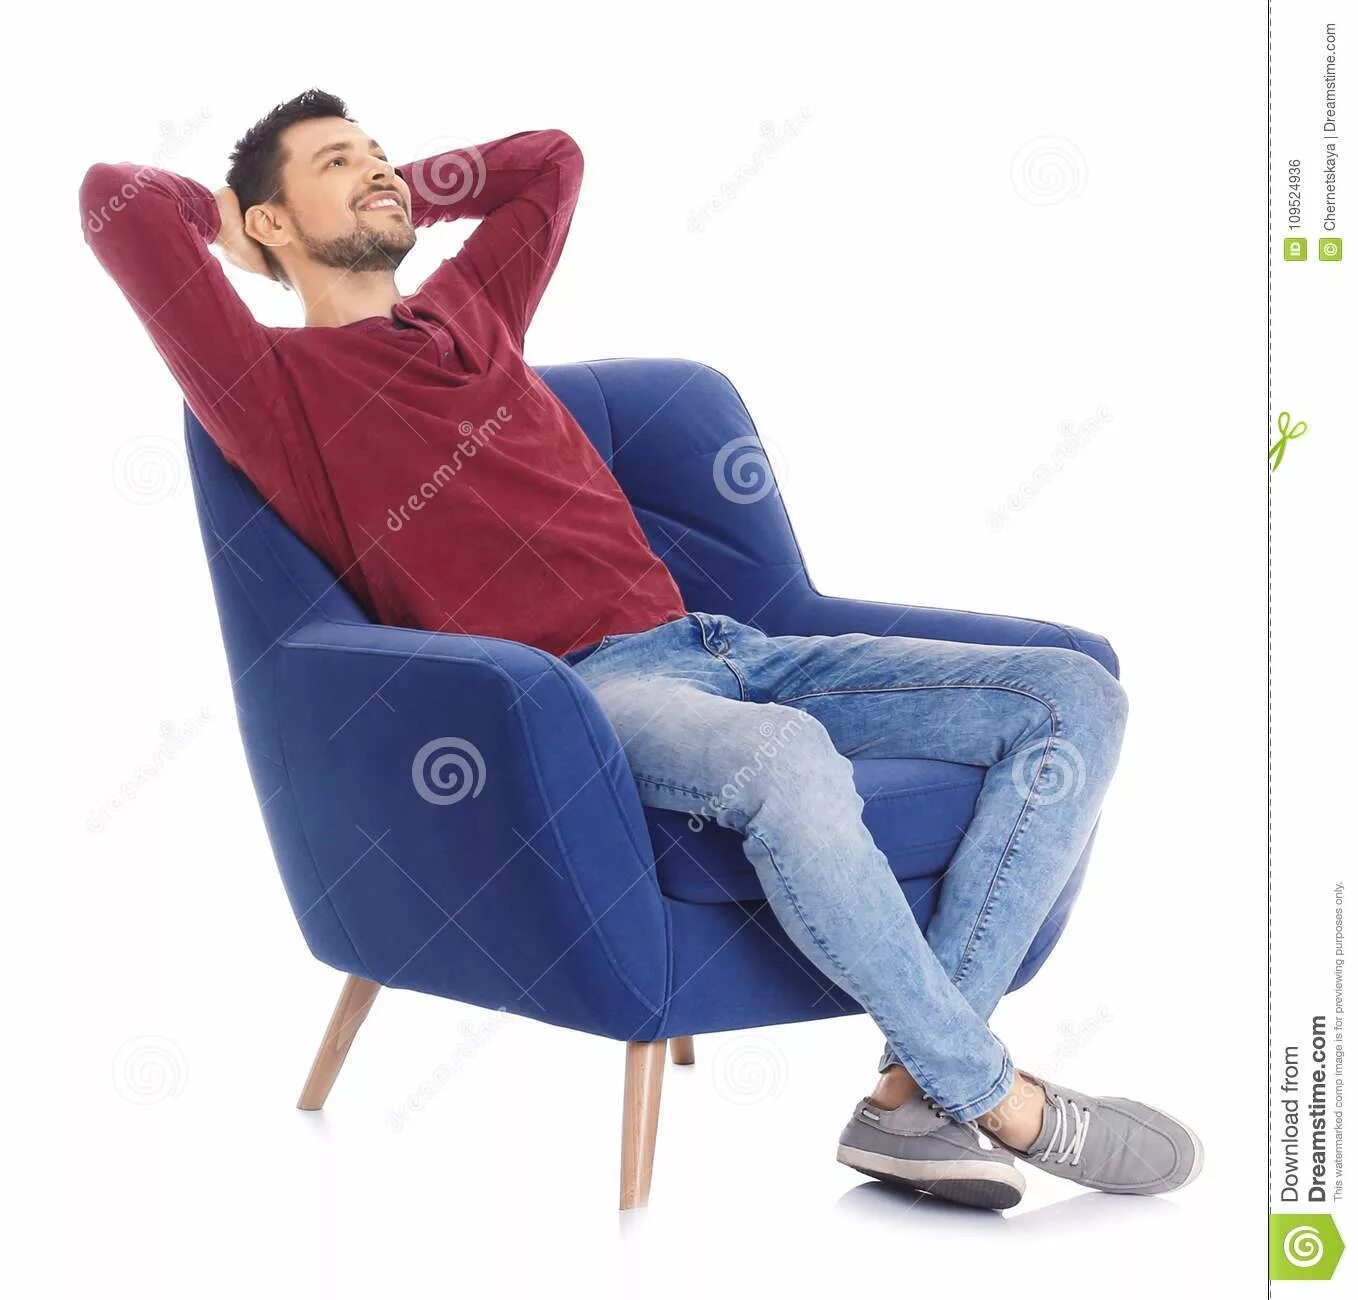 Мужчина в кресле. Мужчина сидит на мягком кресле. Человек отдыхает в кресле. Мужчина расслабленно сидит в кресле.